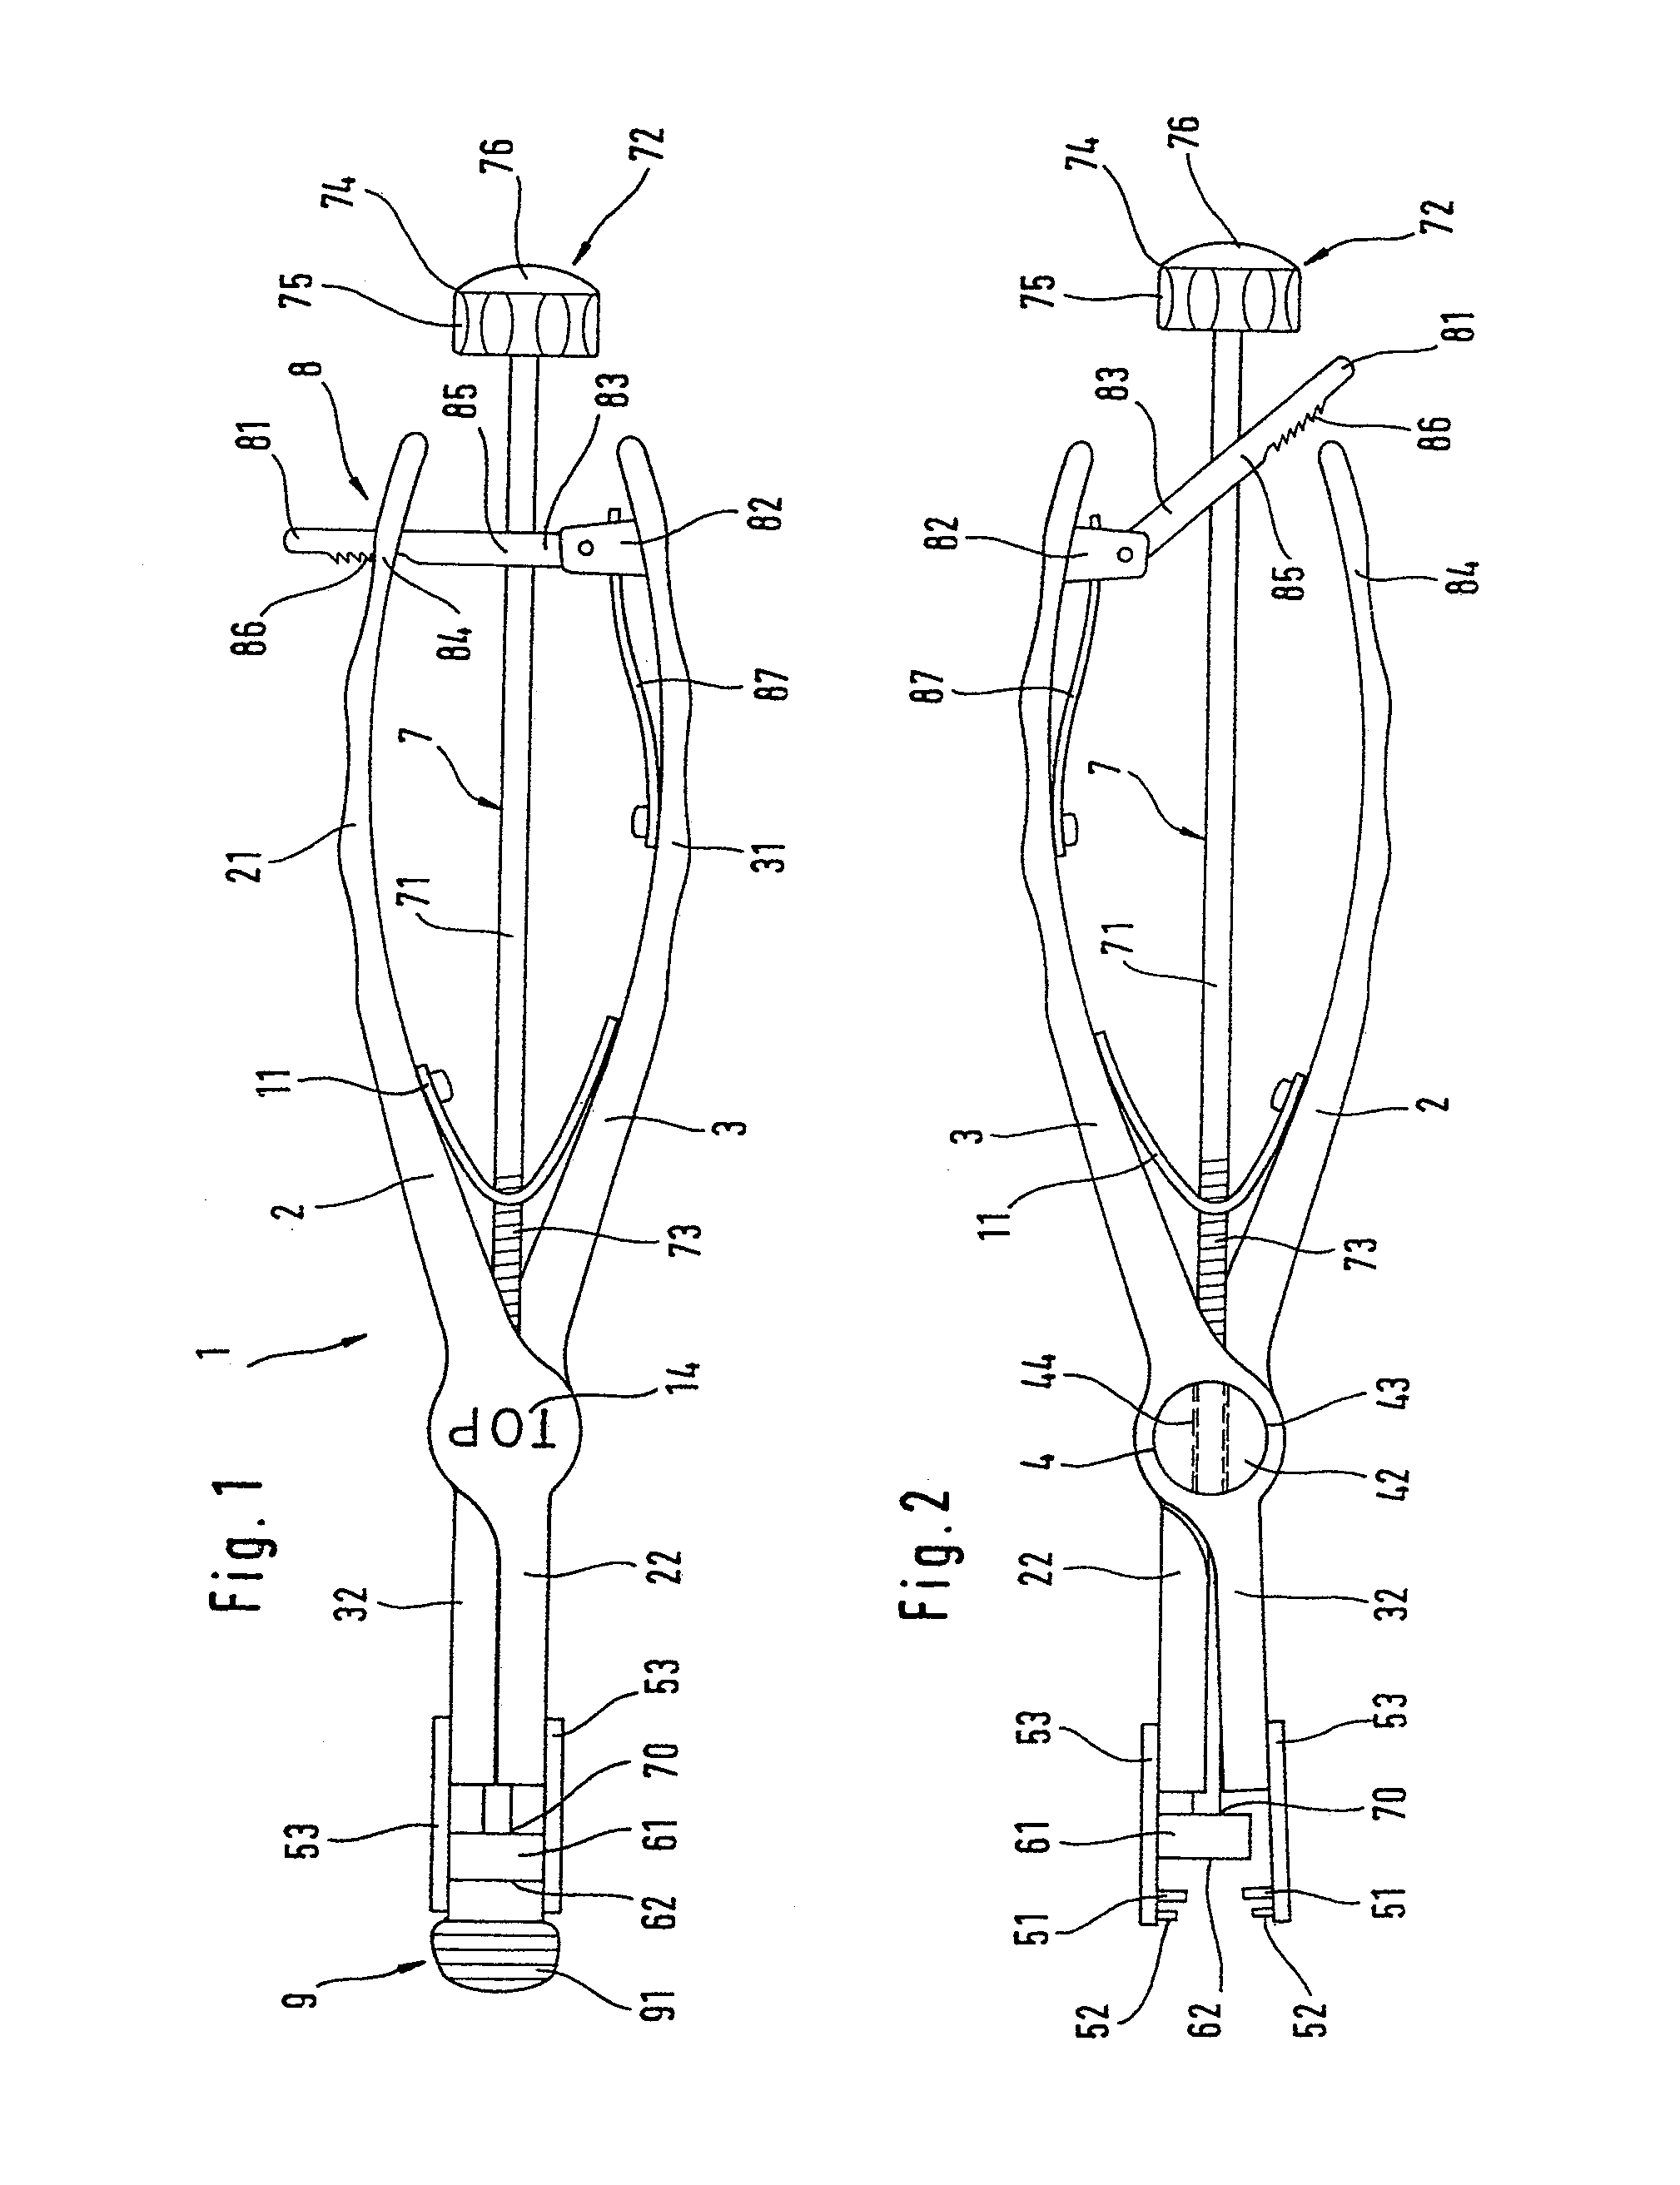 Insertion instrument for cervical prostheses